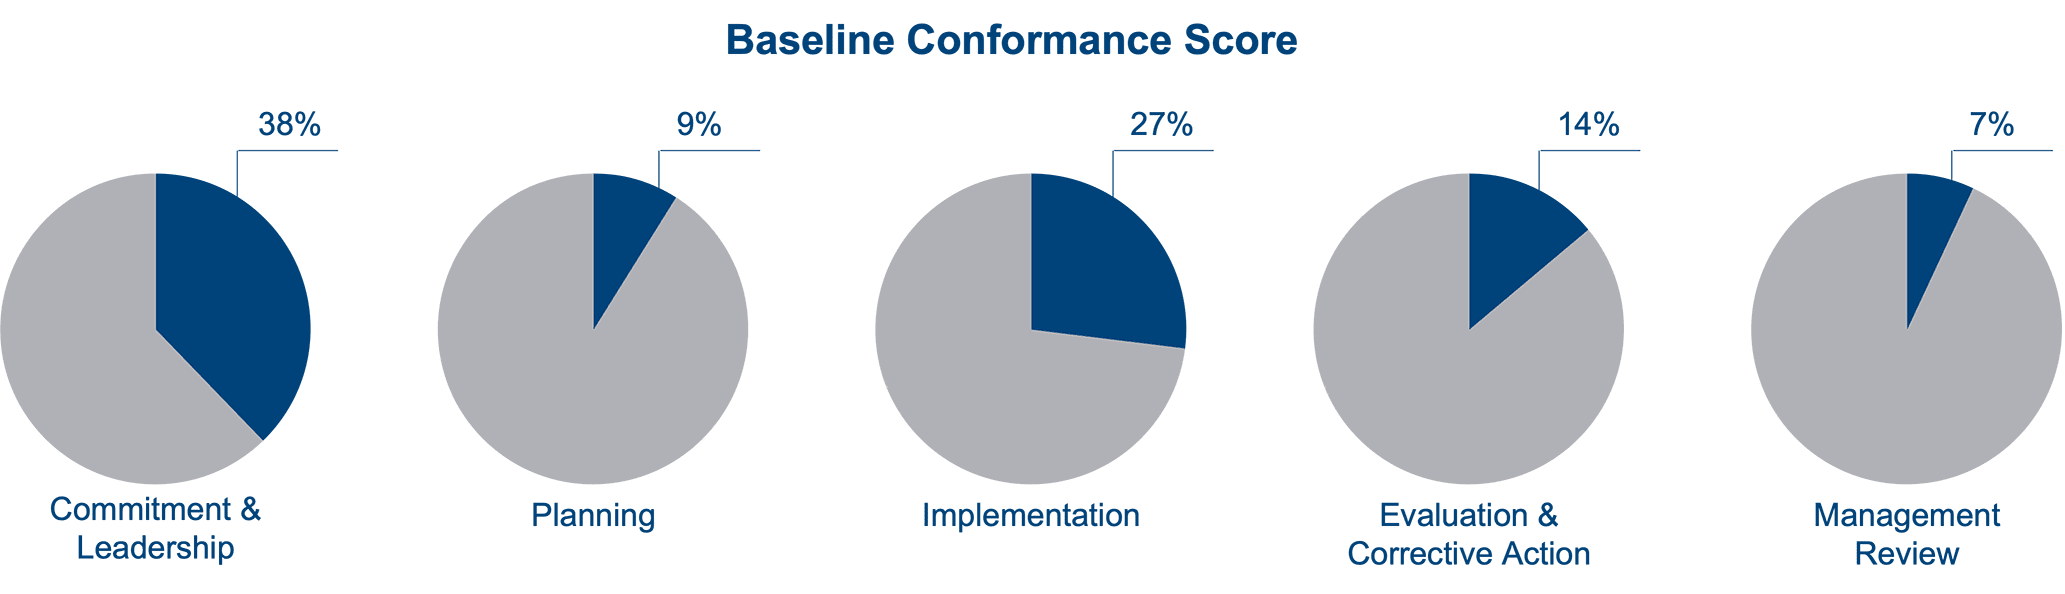 Baseline conformance score